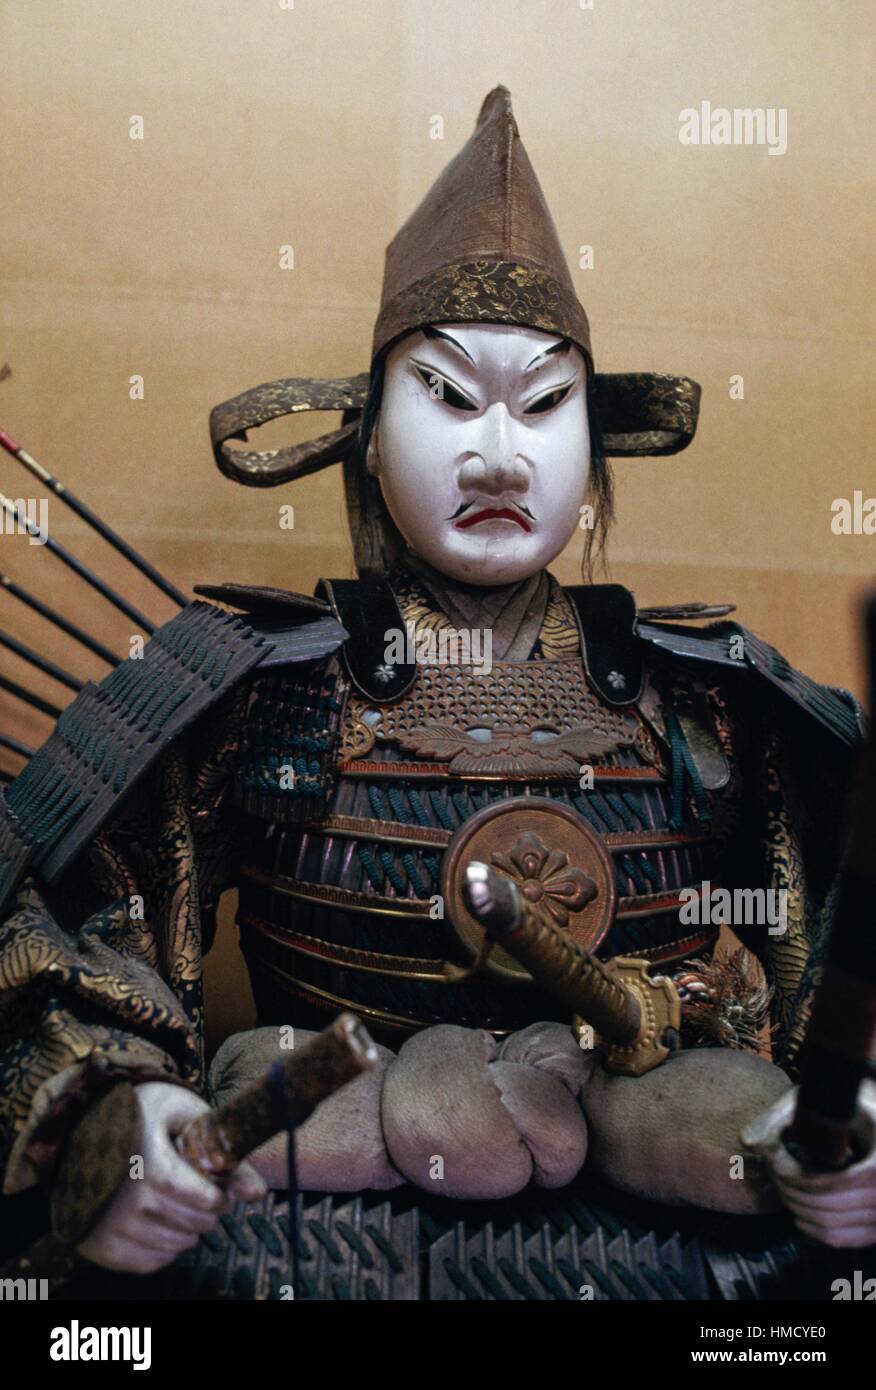 Samurai doll with helmet, weapons and armour, ceramic face, Kurashiki doll museum, Japan. Stock Photo